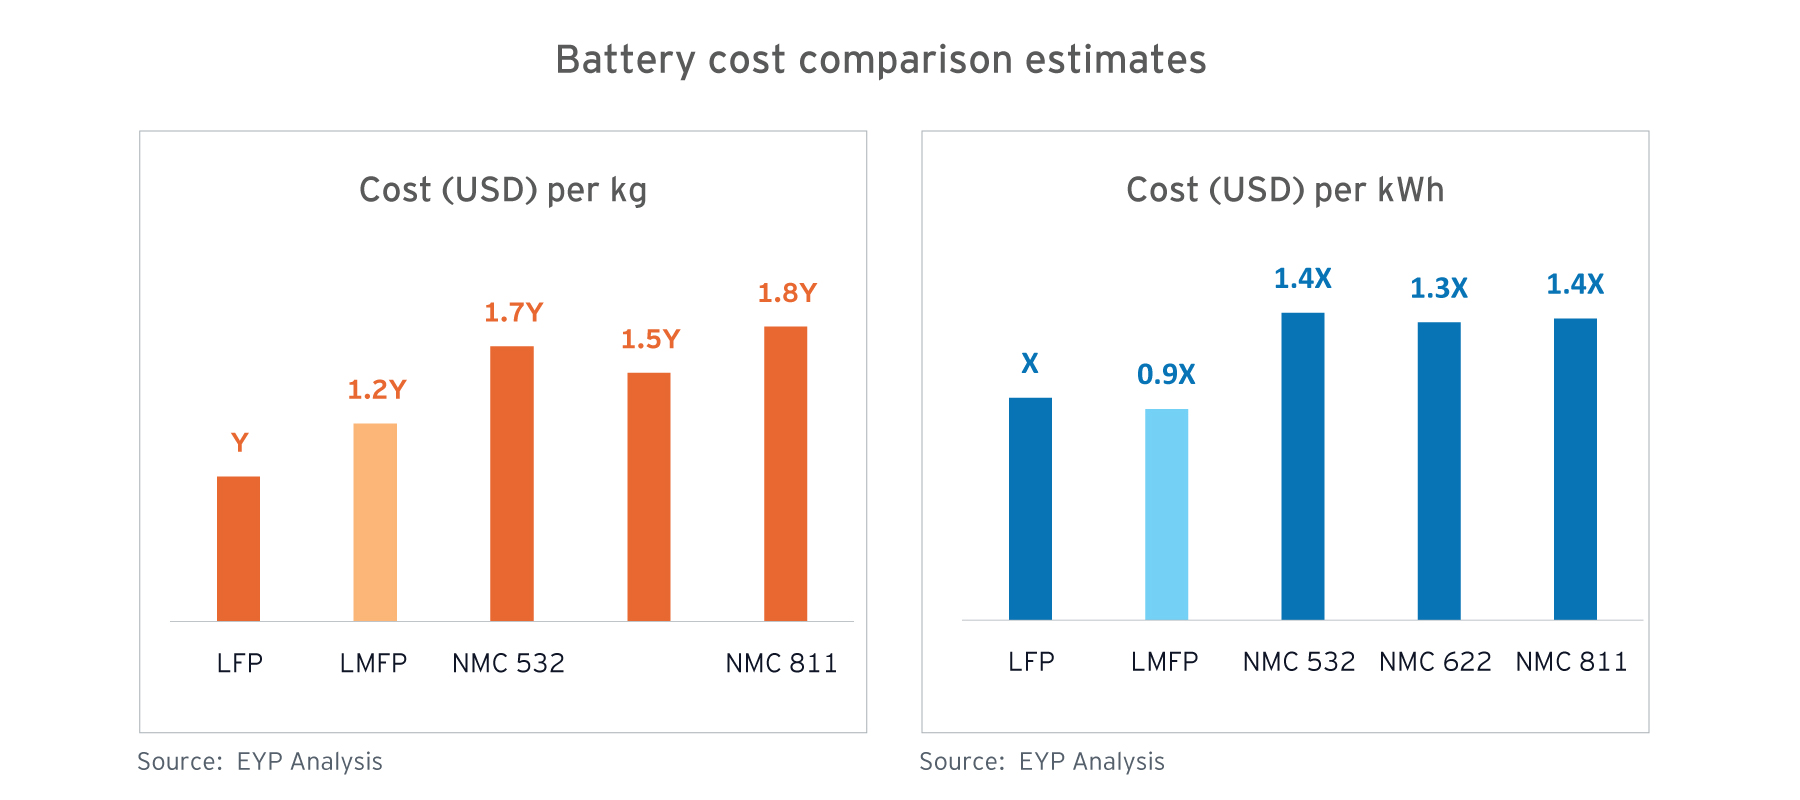 LMFP - Key metals pricing